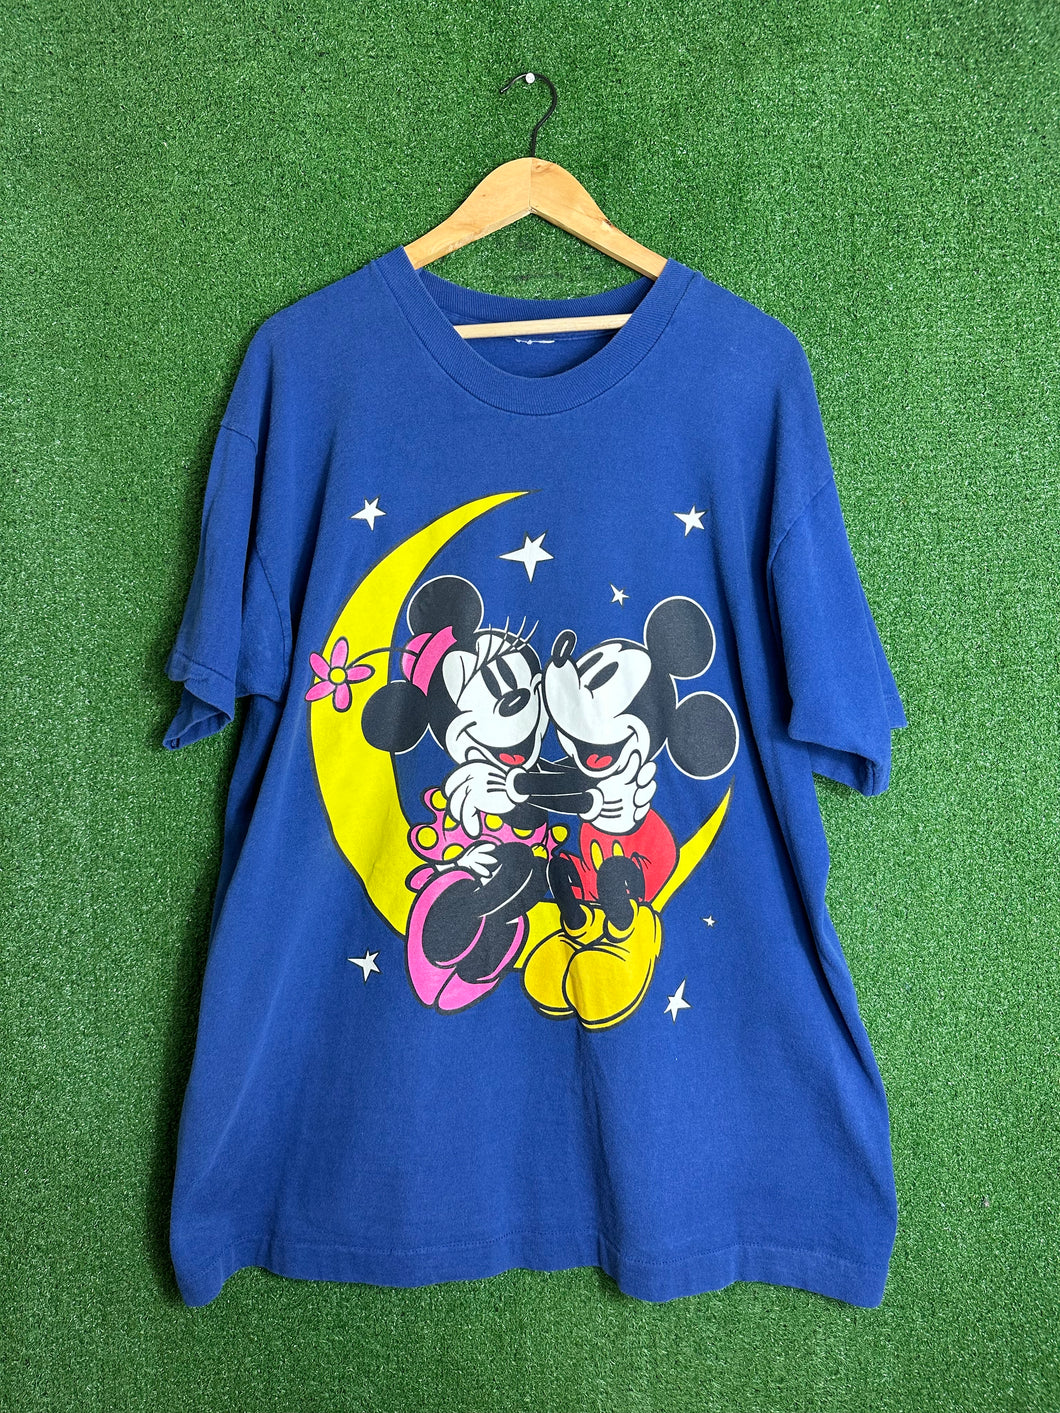 VTG 90s Disney Minnie x Mickey Mouse Shirt Size Large